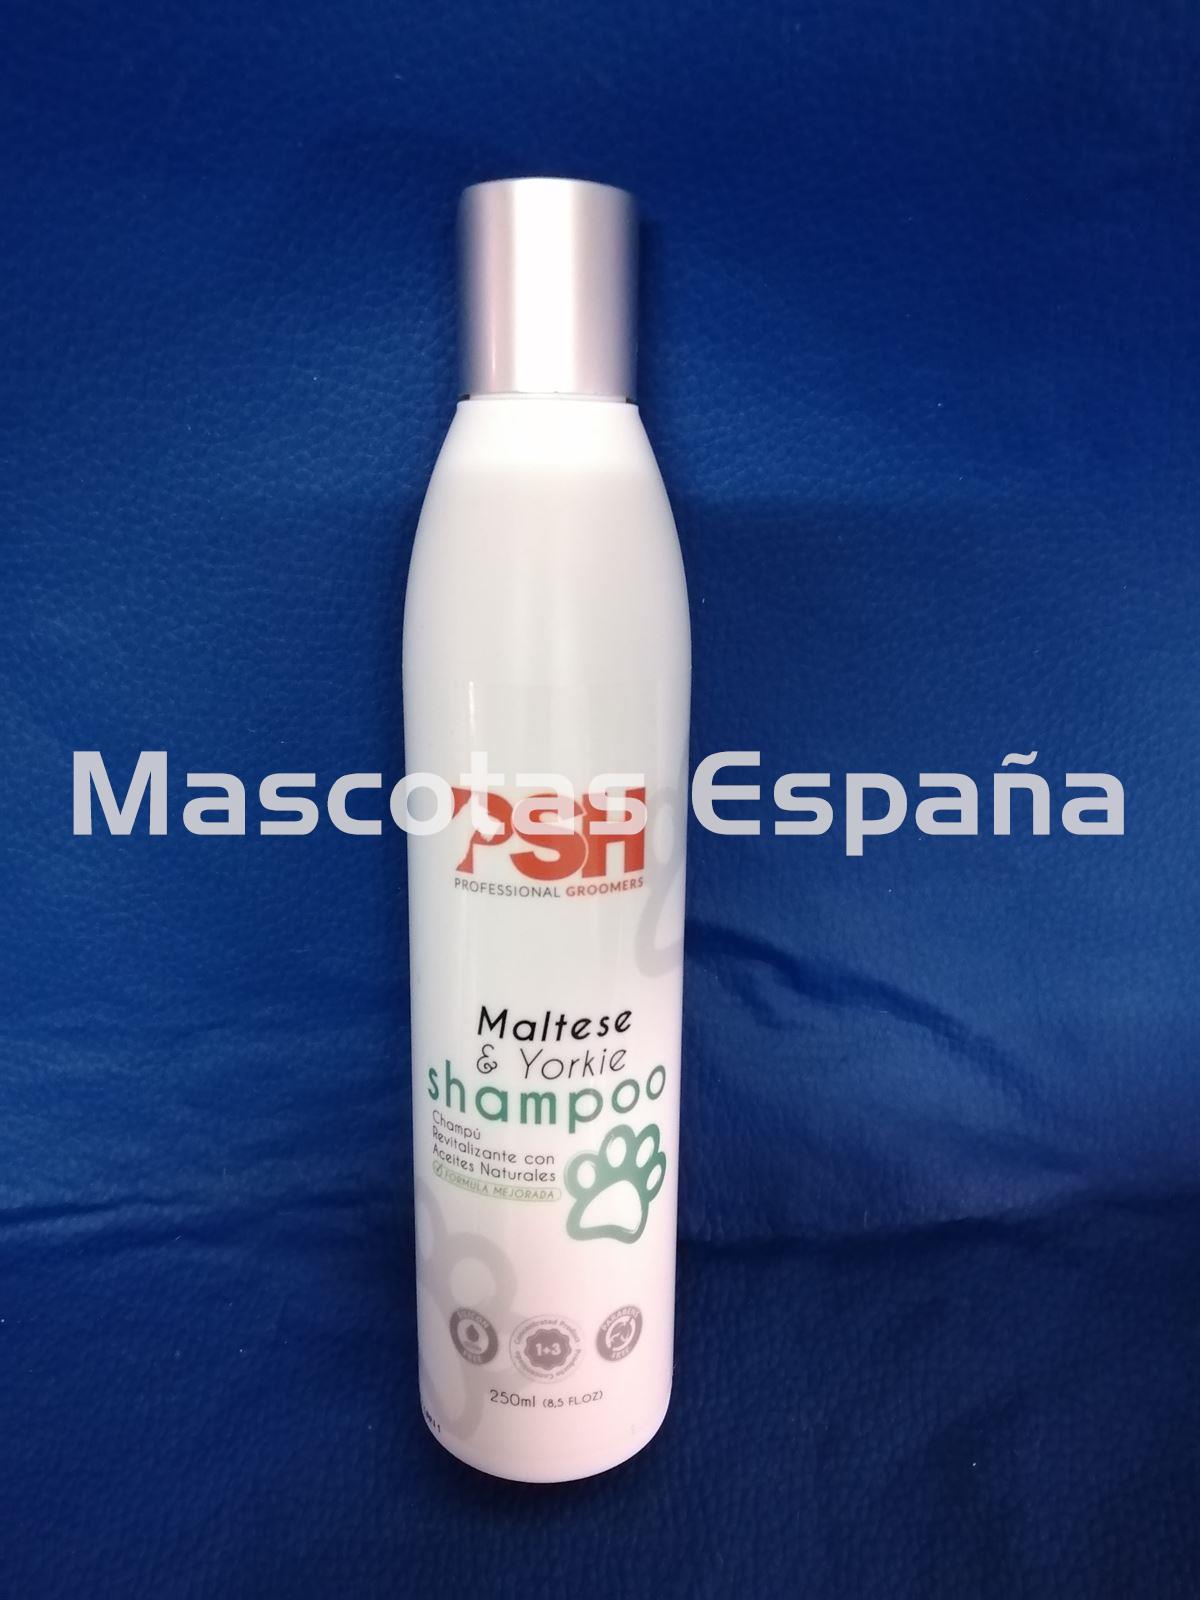 PSH Maltes & Yorkie Shampoo (Champú revitalizante con aceites naturales) 250ml - Imagen 1